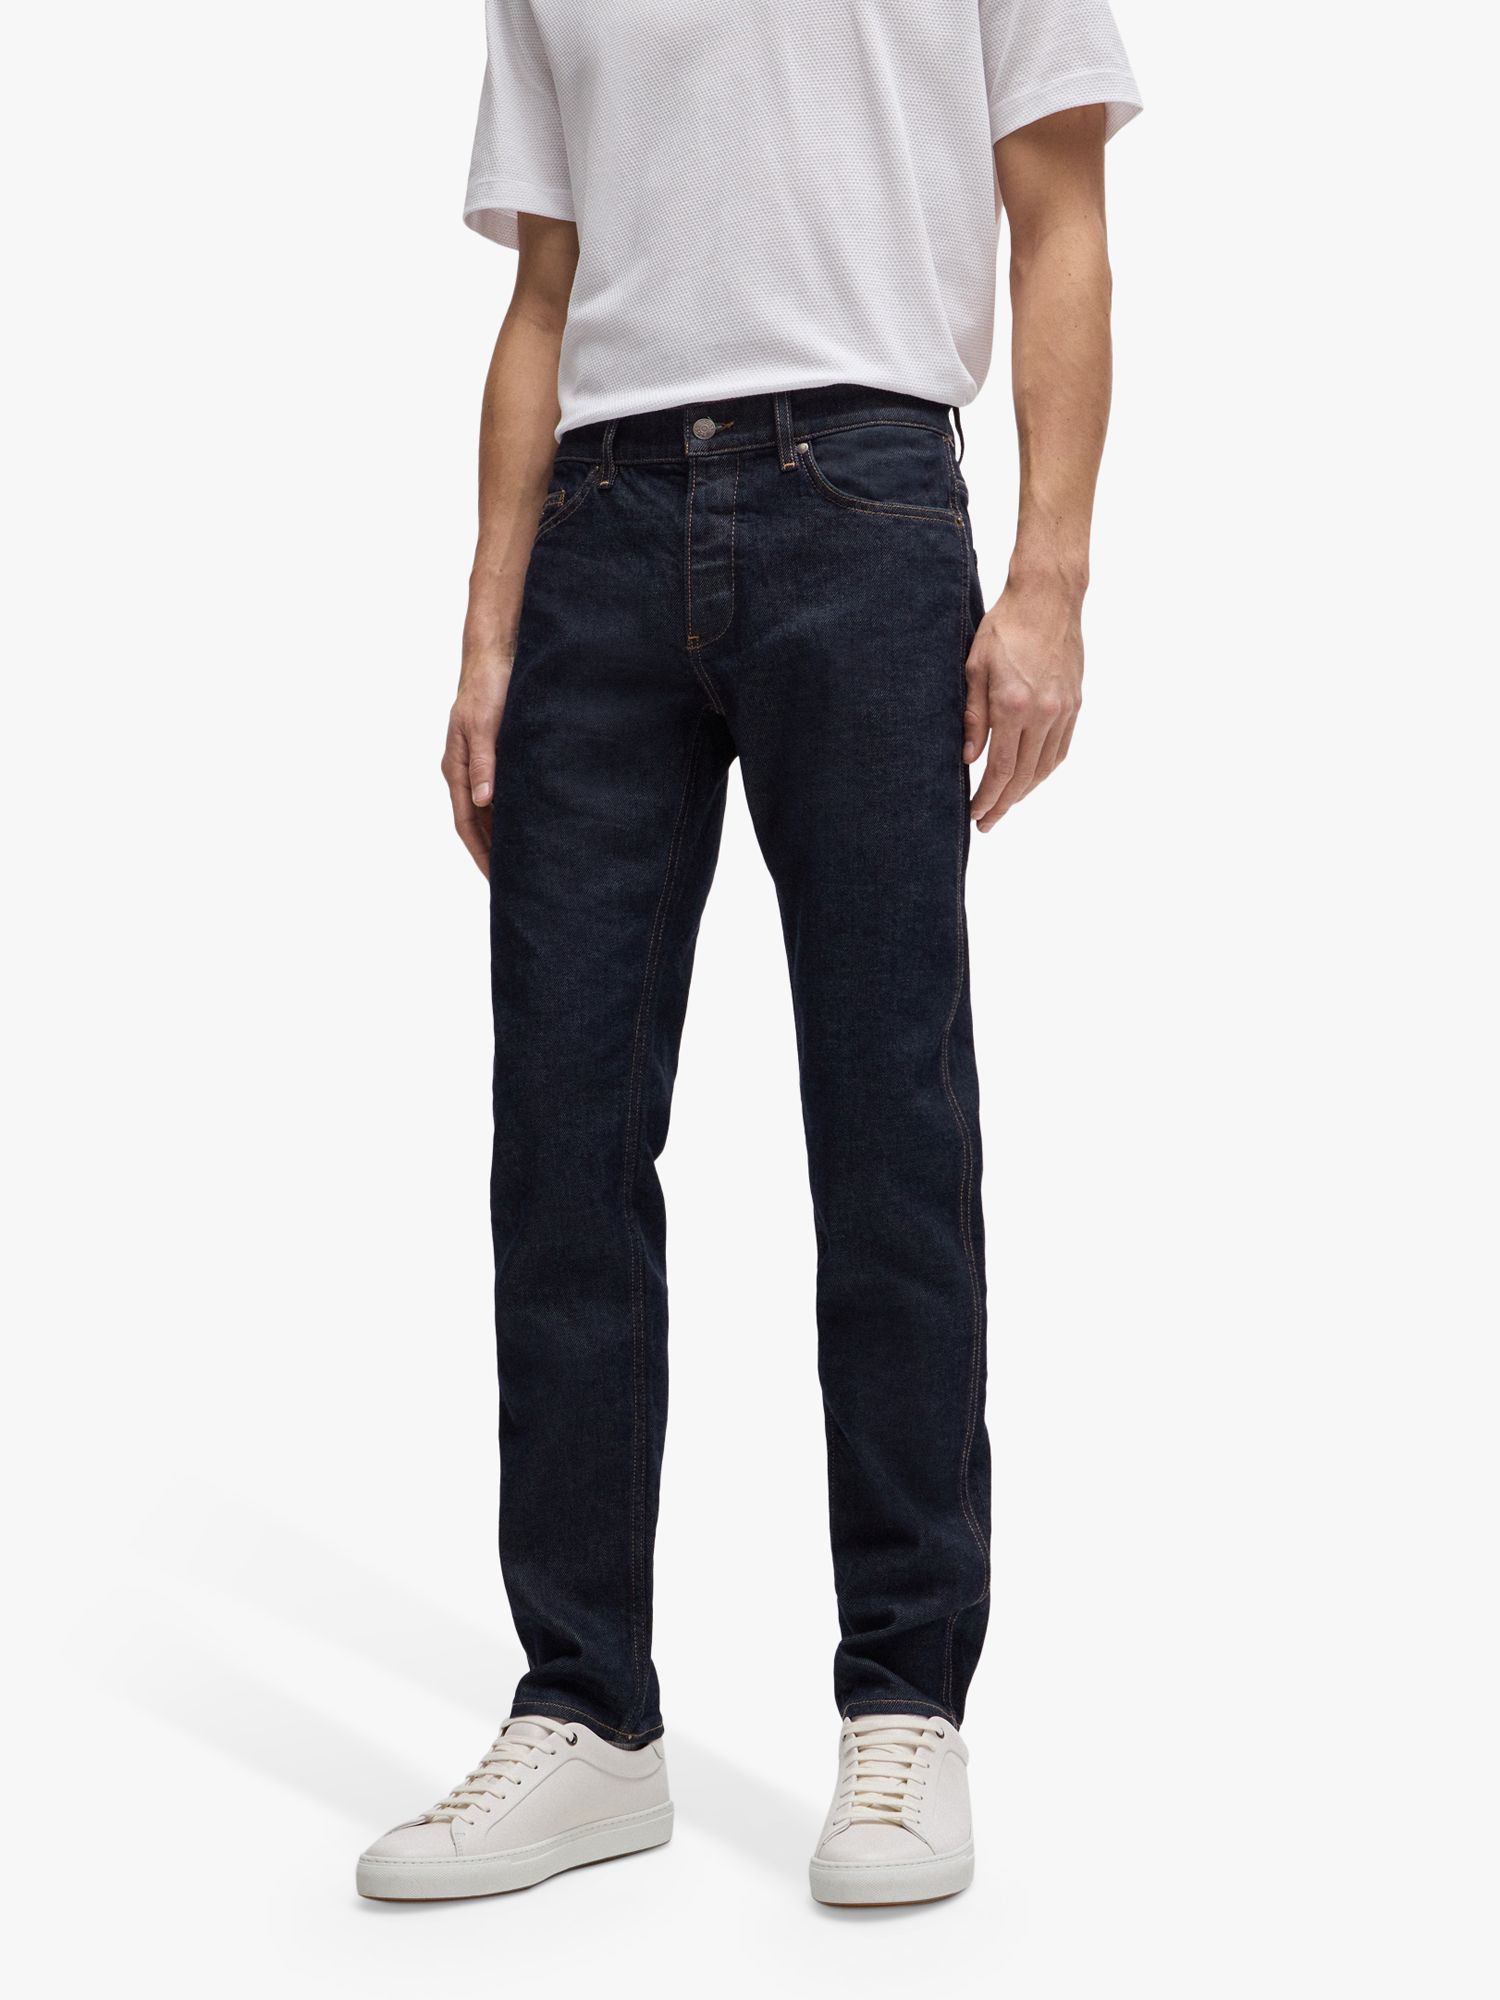 BOSS Delaware3 Slim Fit Jeans, Navy, 30L